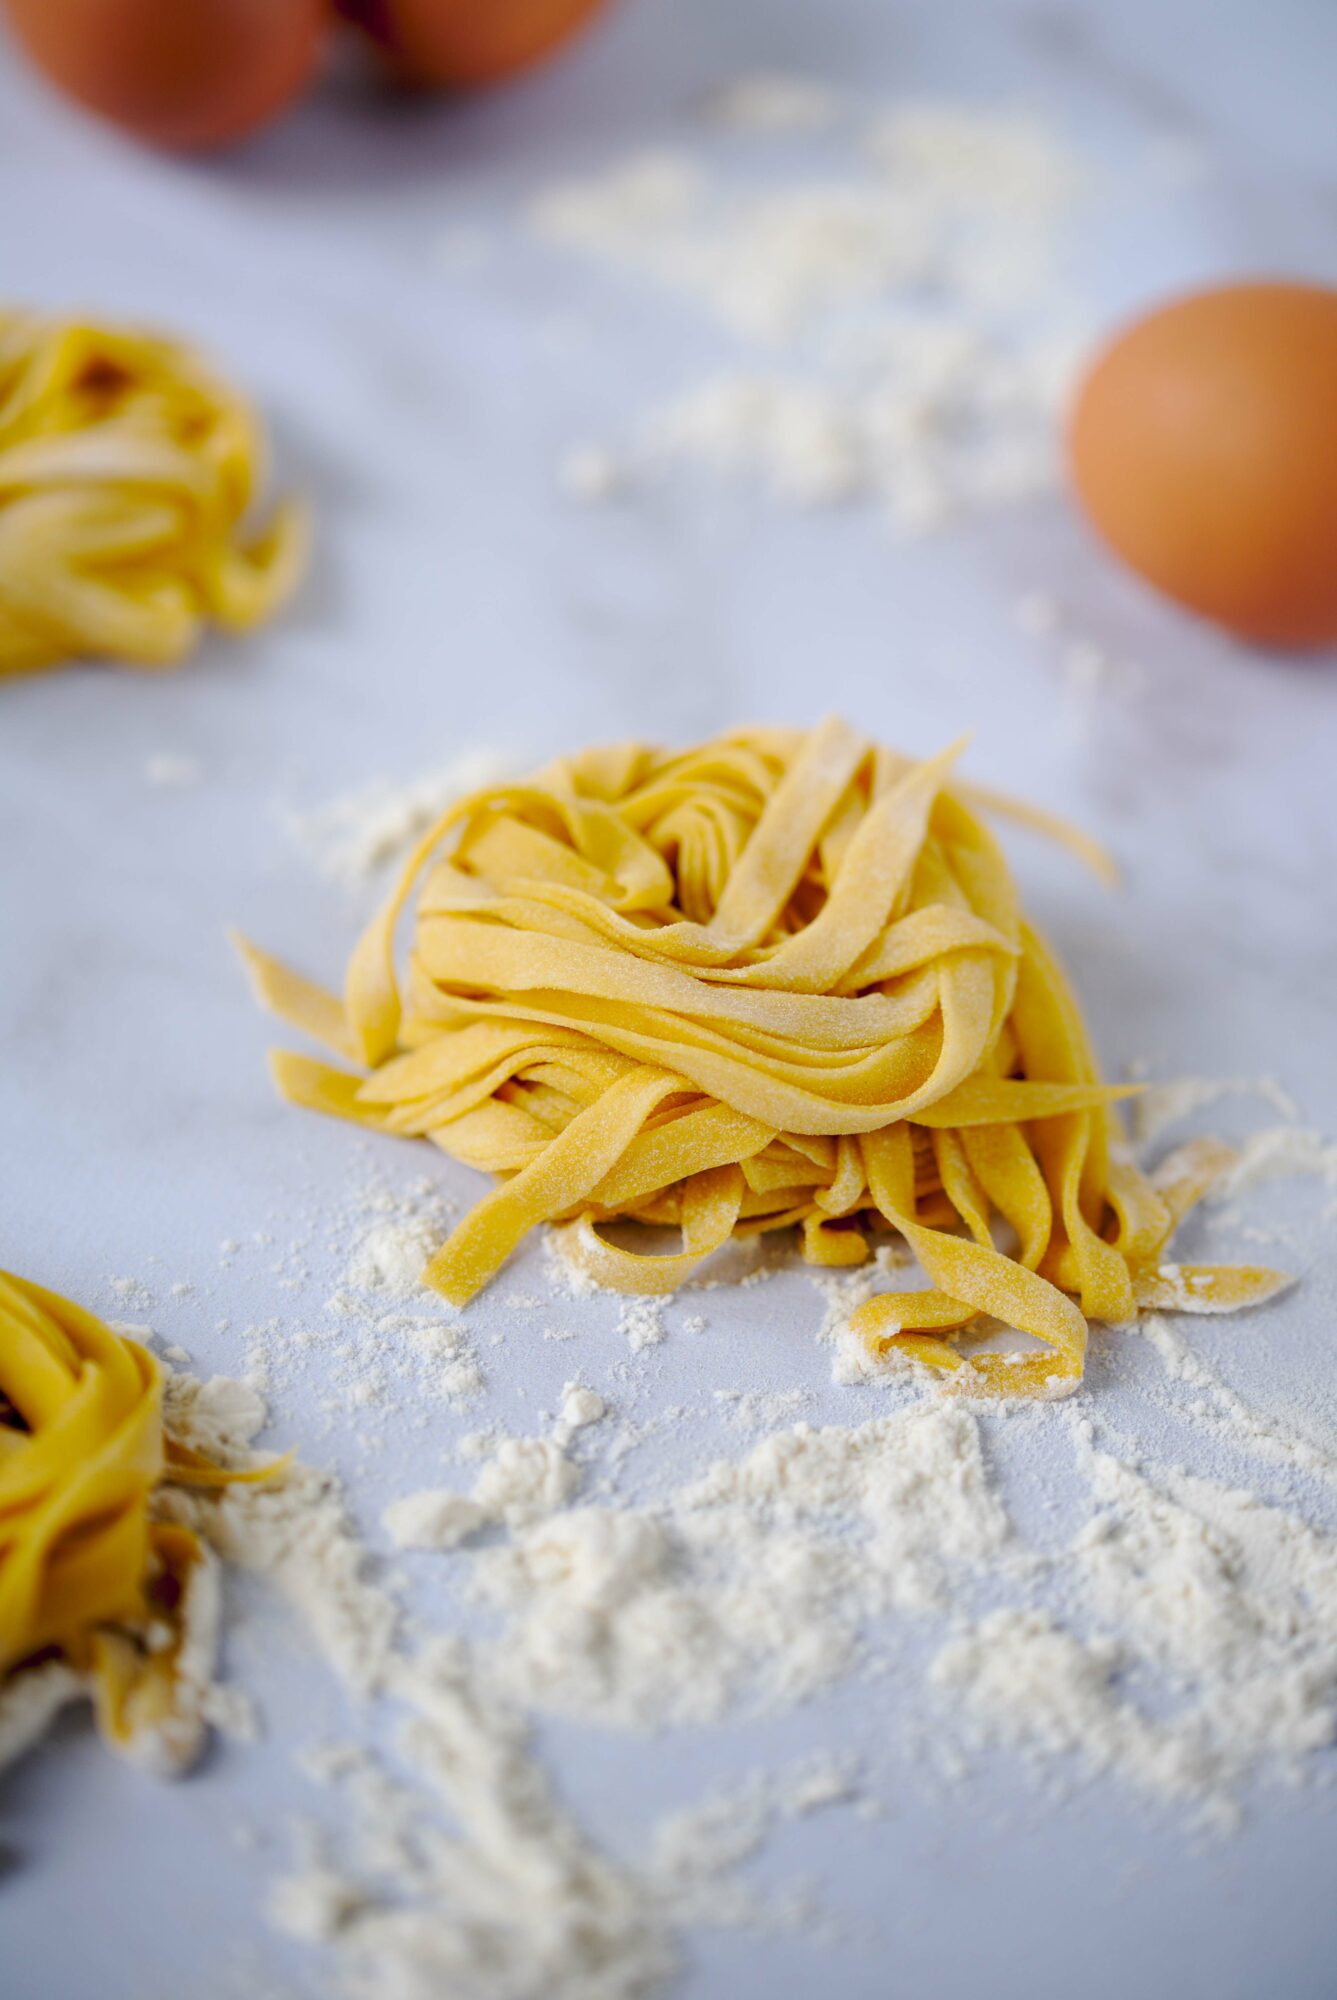 Homemade Egg Pasta - My Secret Confections